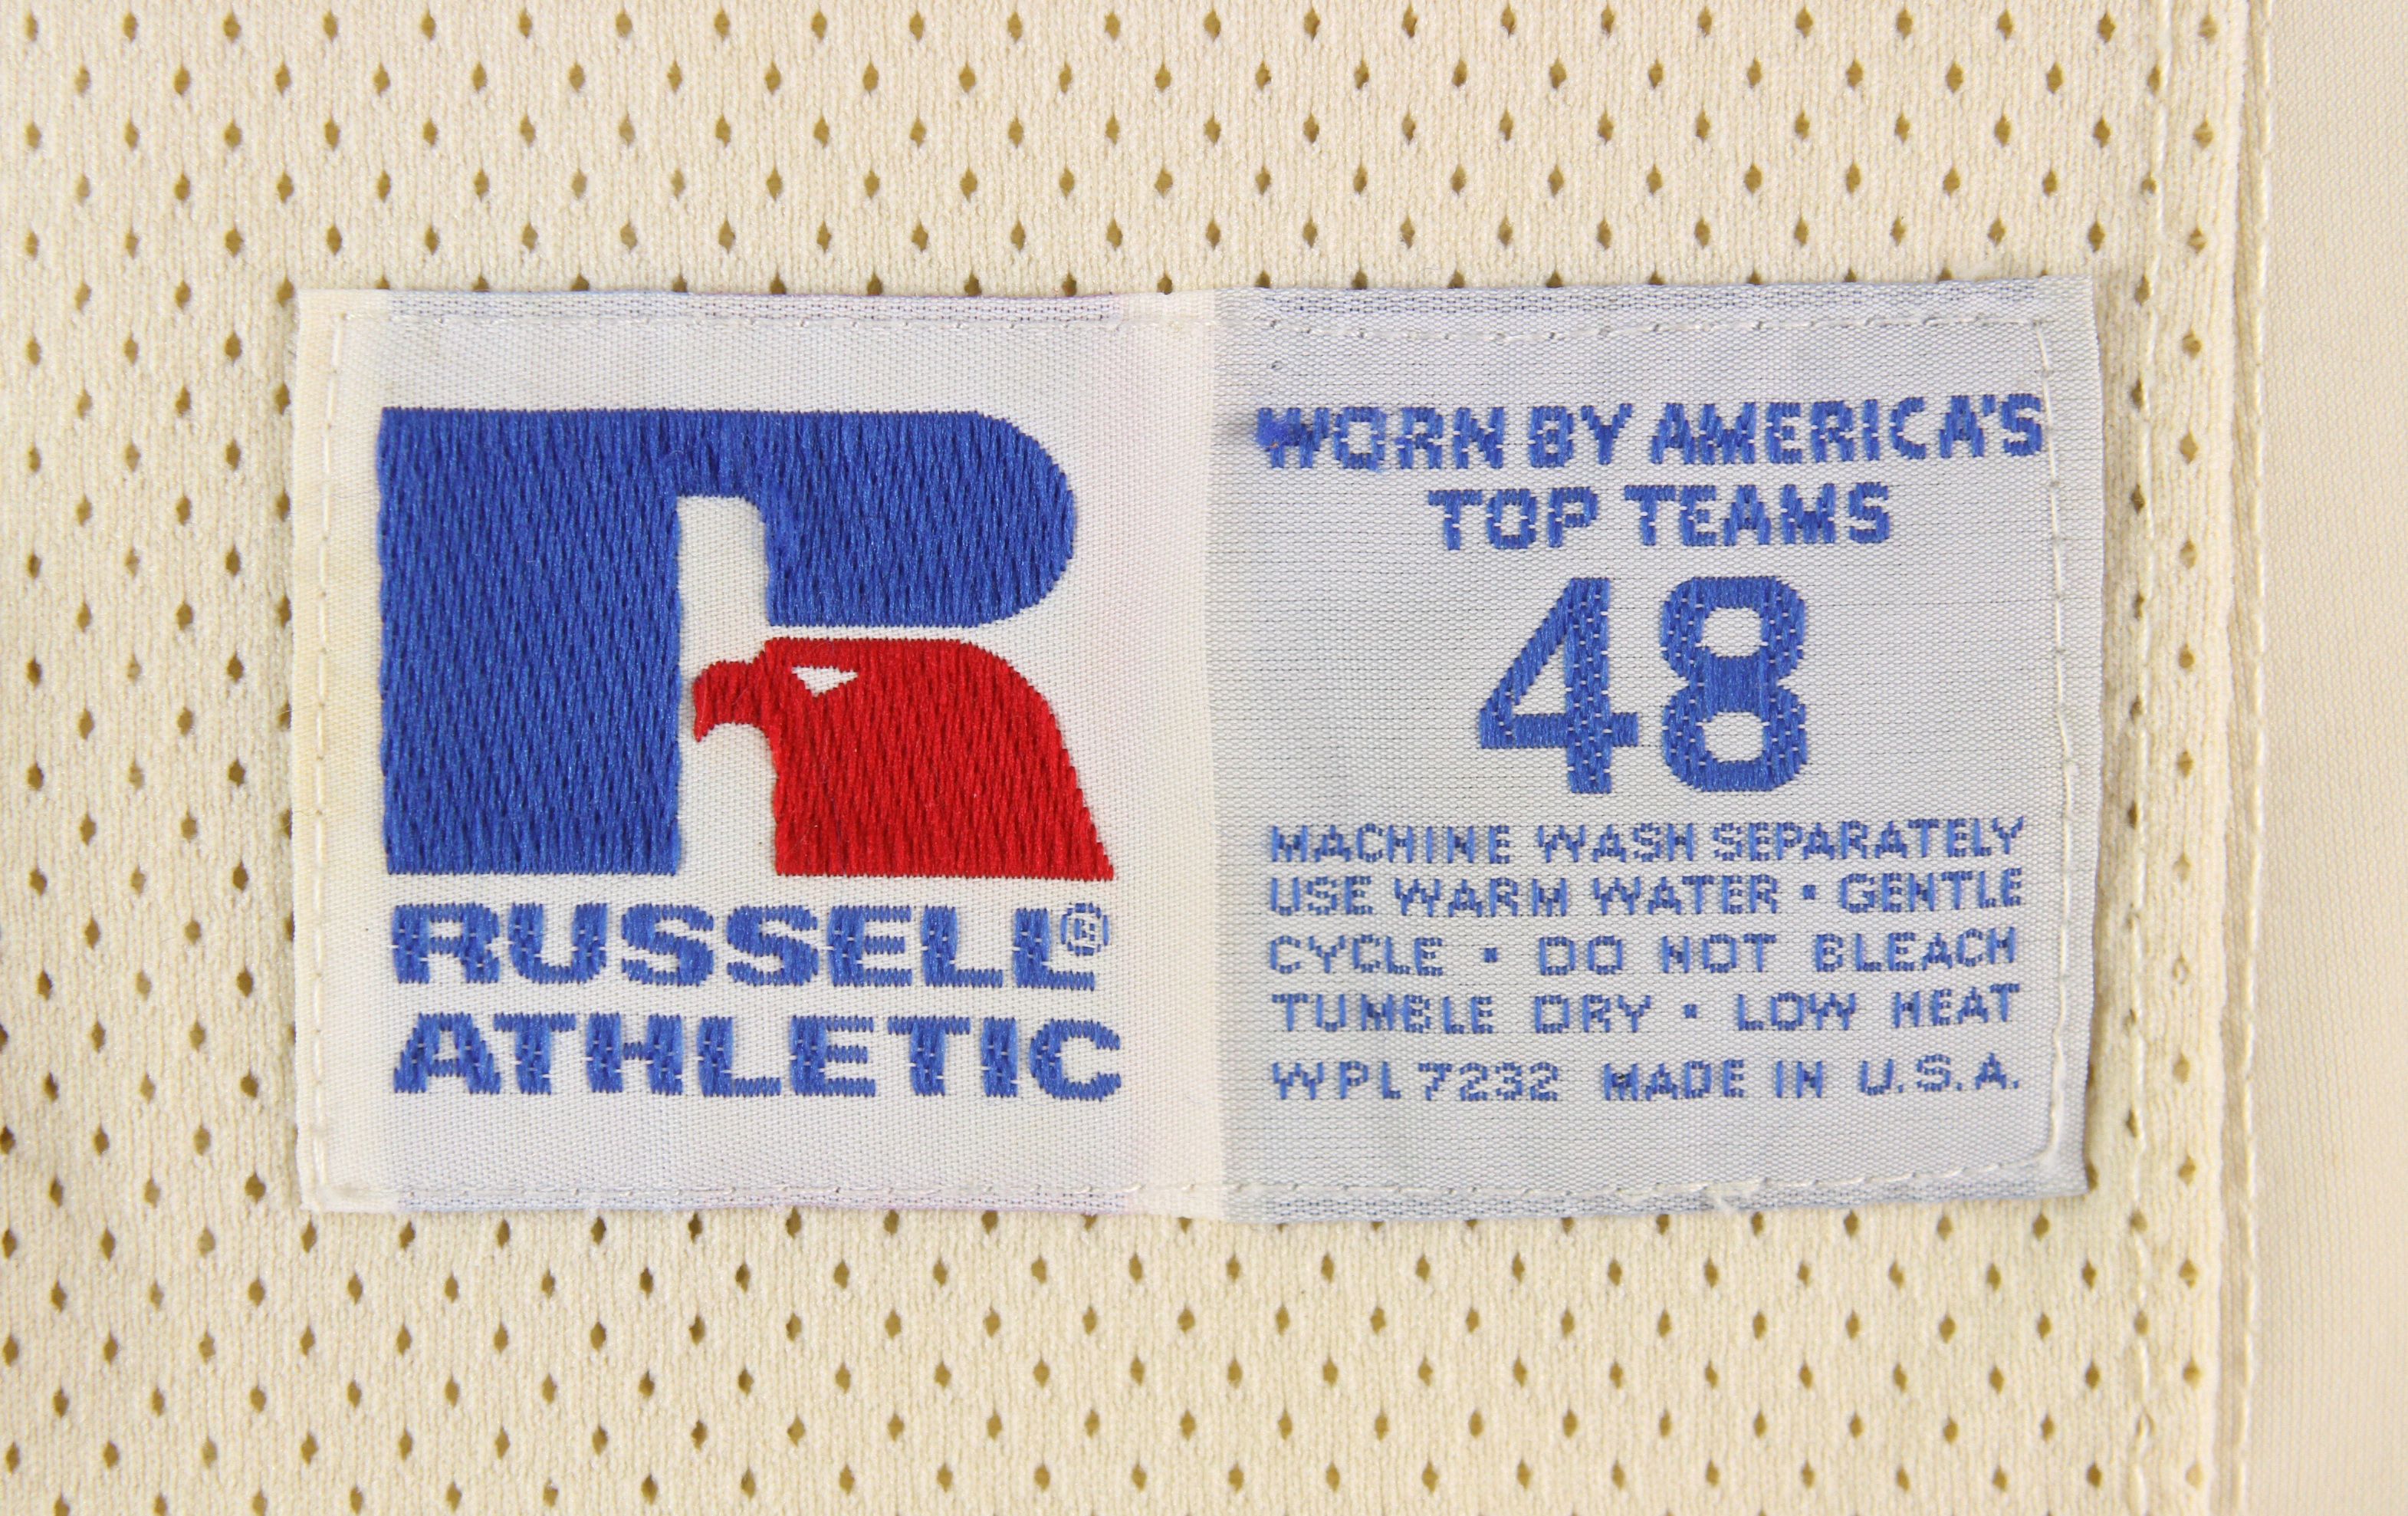 Lot Detail - Circa 1992 Reggie White Philadelphia Eagles Game-Used &  Autographed Jersey (Full JSA • Multiple Repairs)